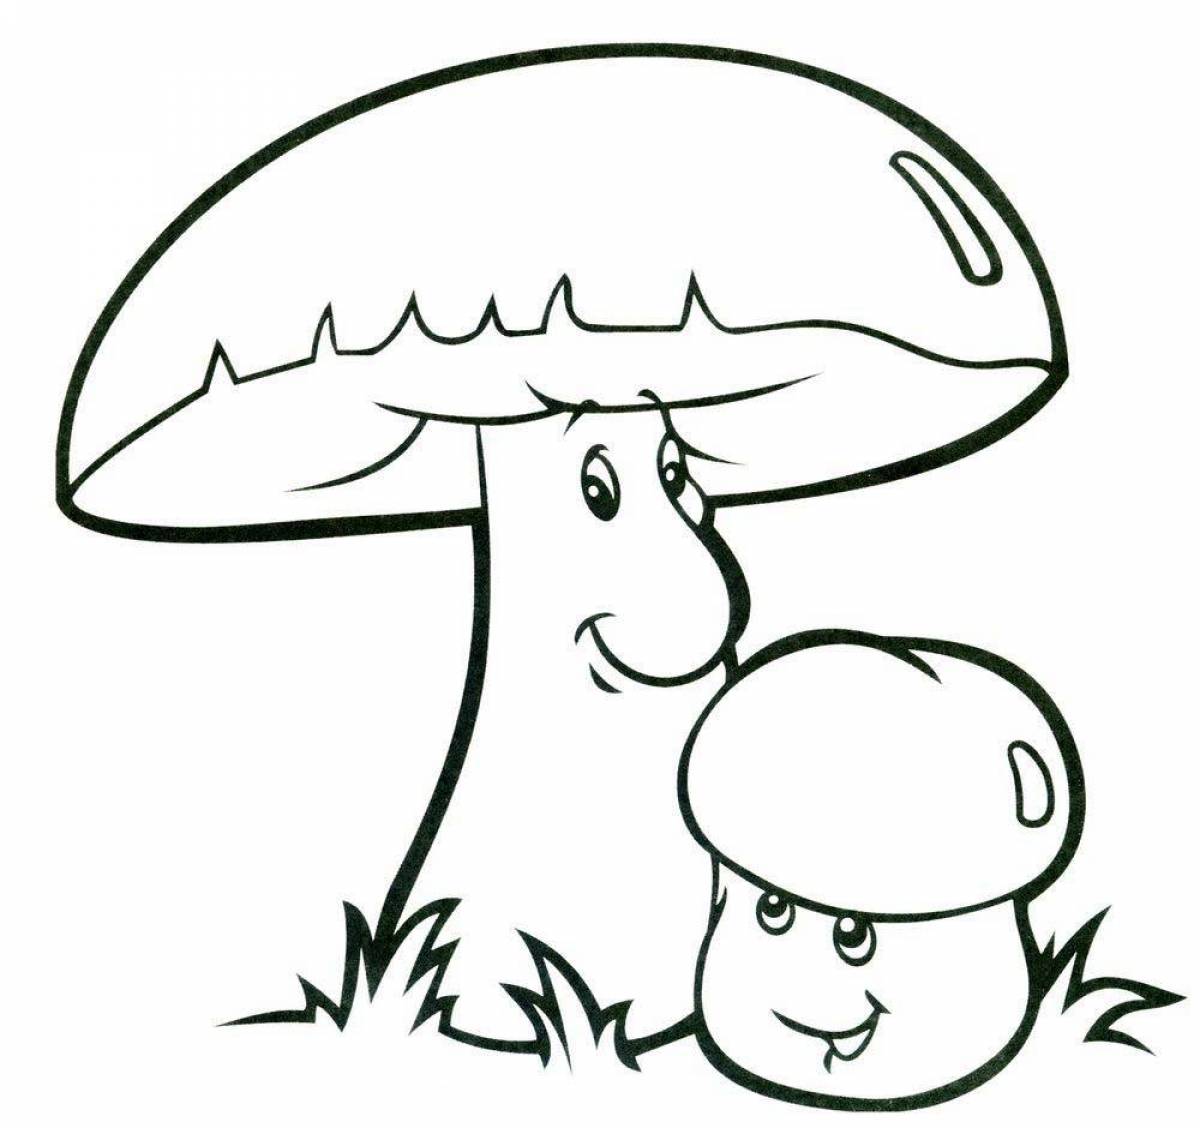 Colorful mushrooms coloring book for kids